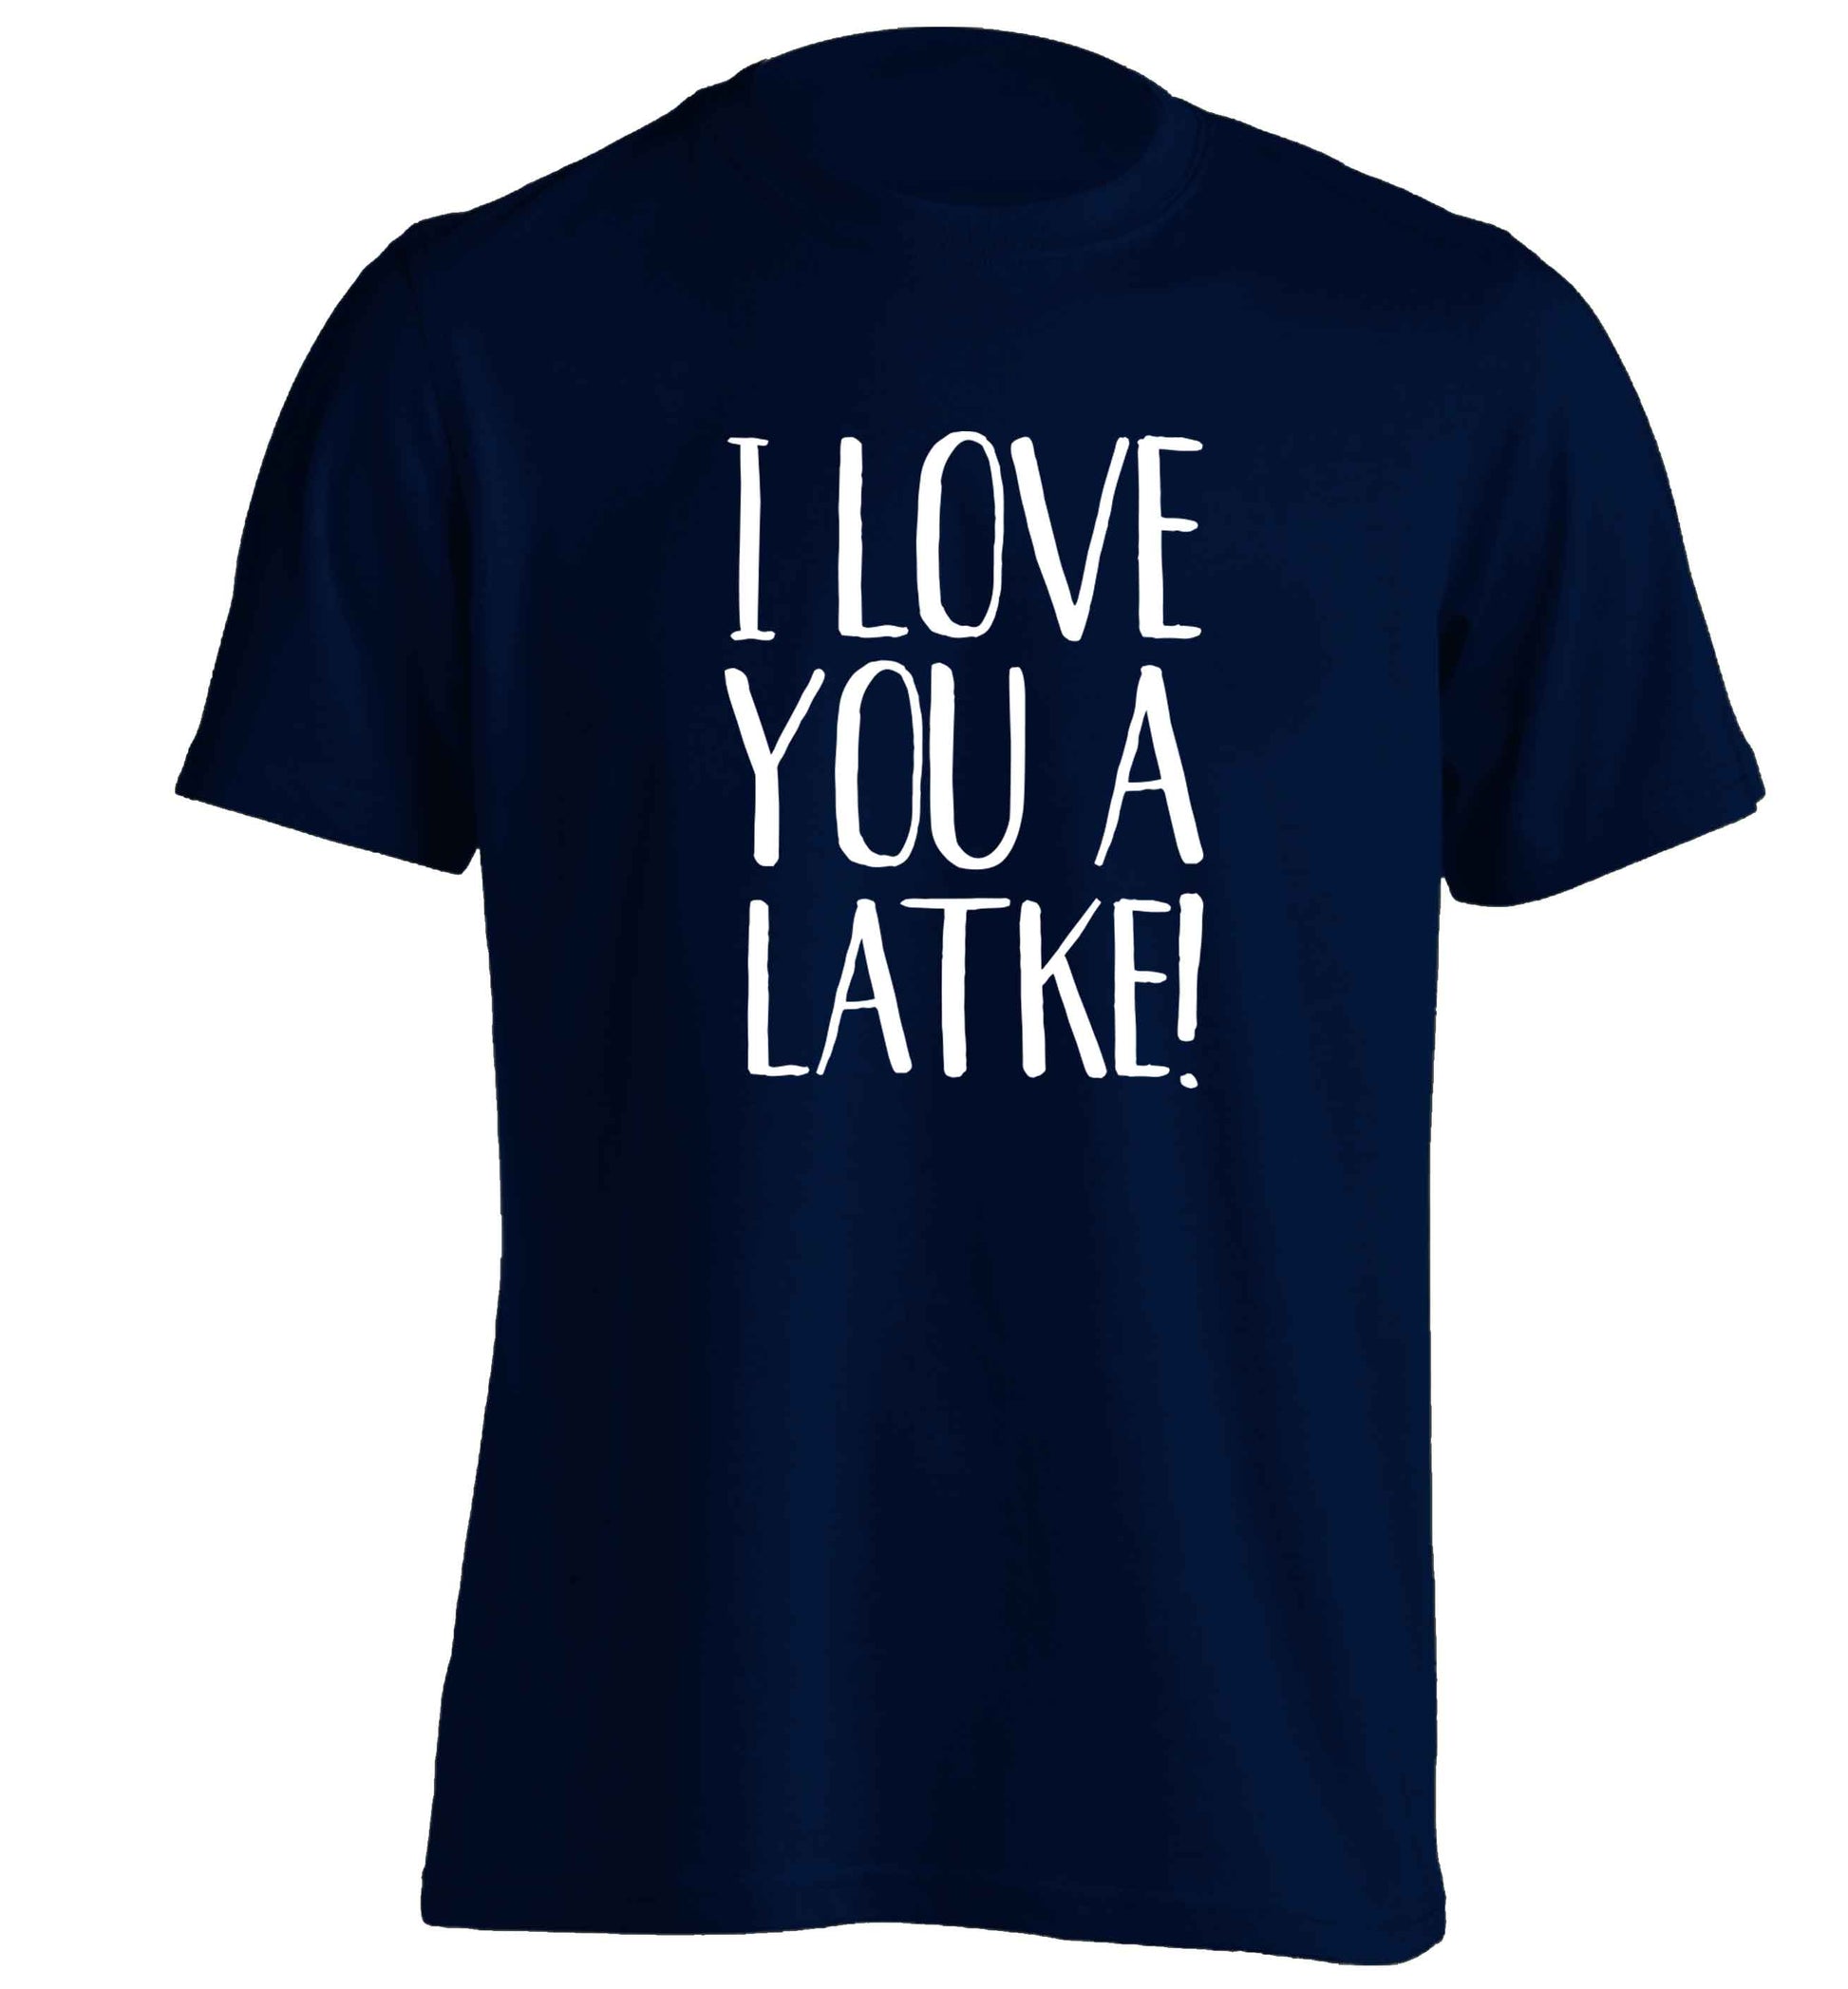 I love you a latke! adults unisex navy Tshirt 2XL